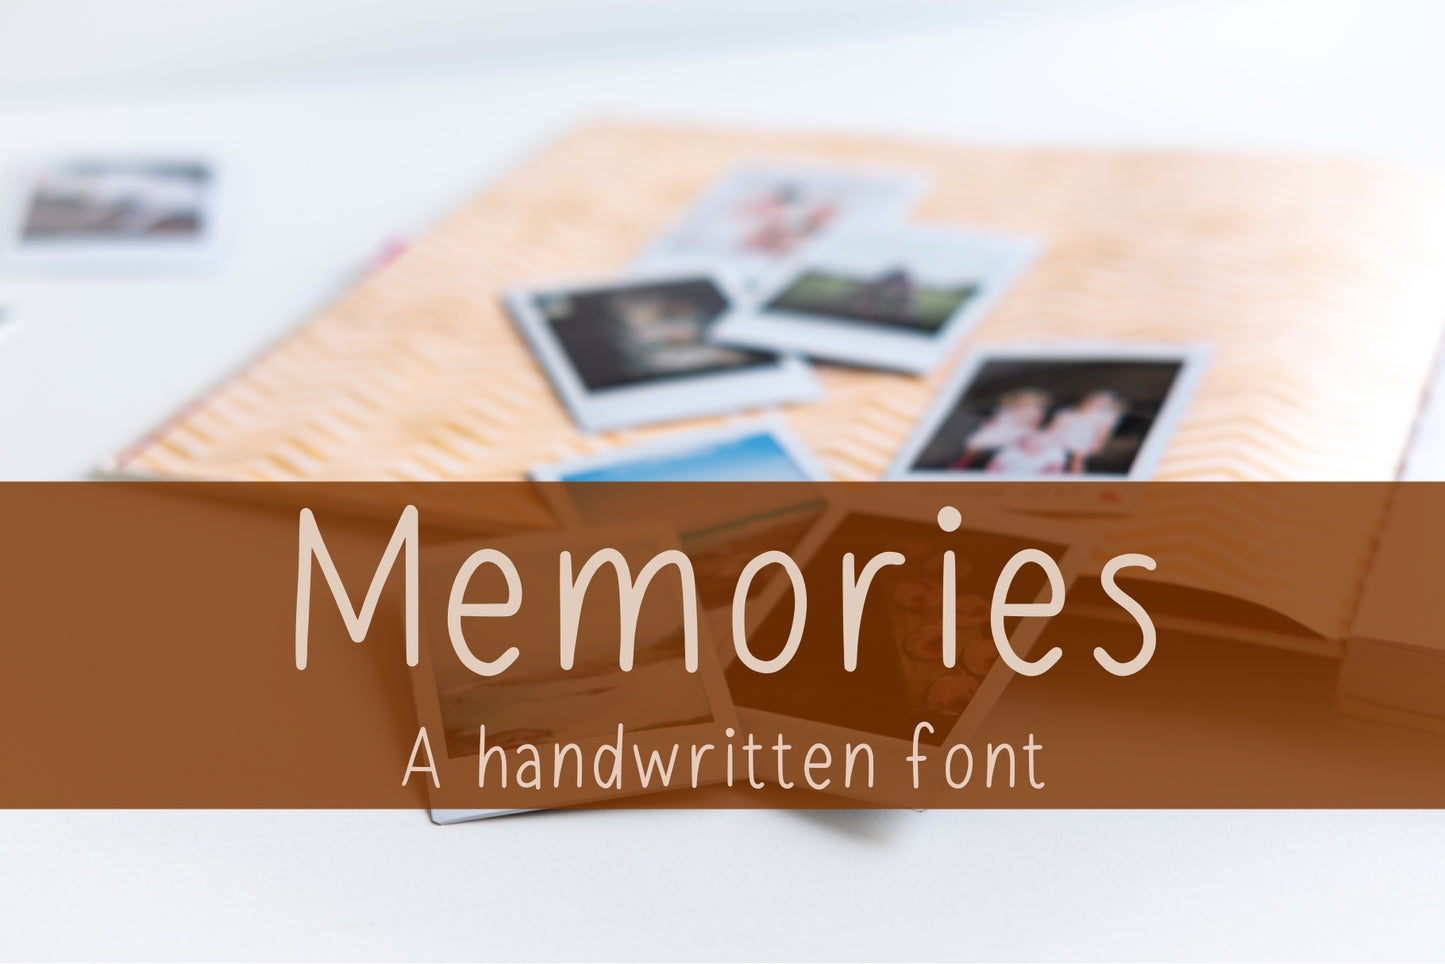 Handwritten Font - Memories